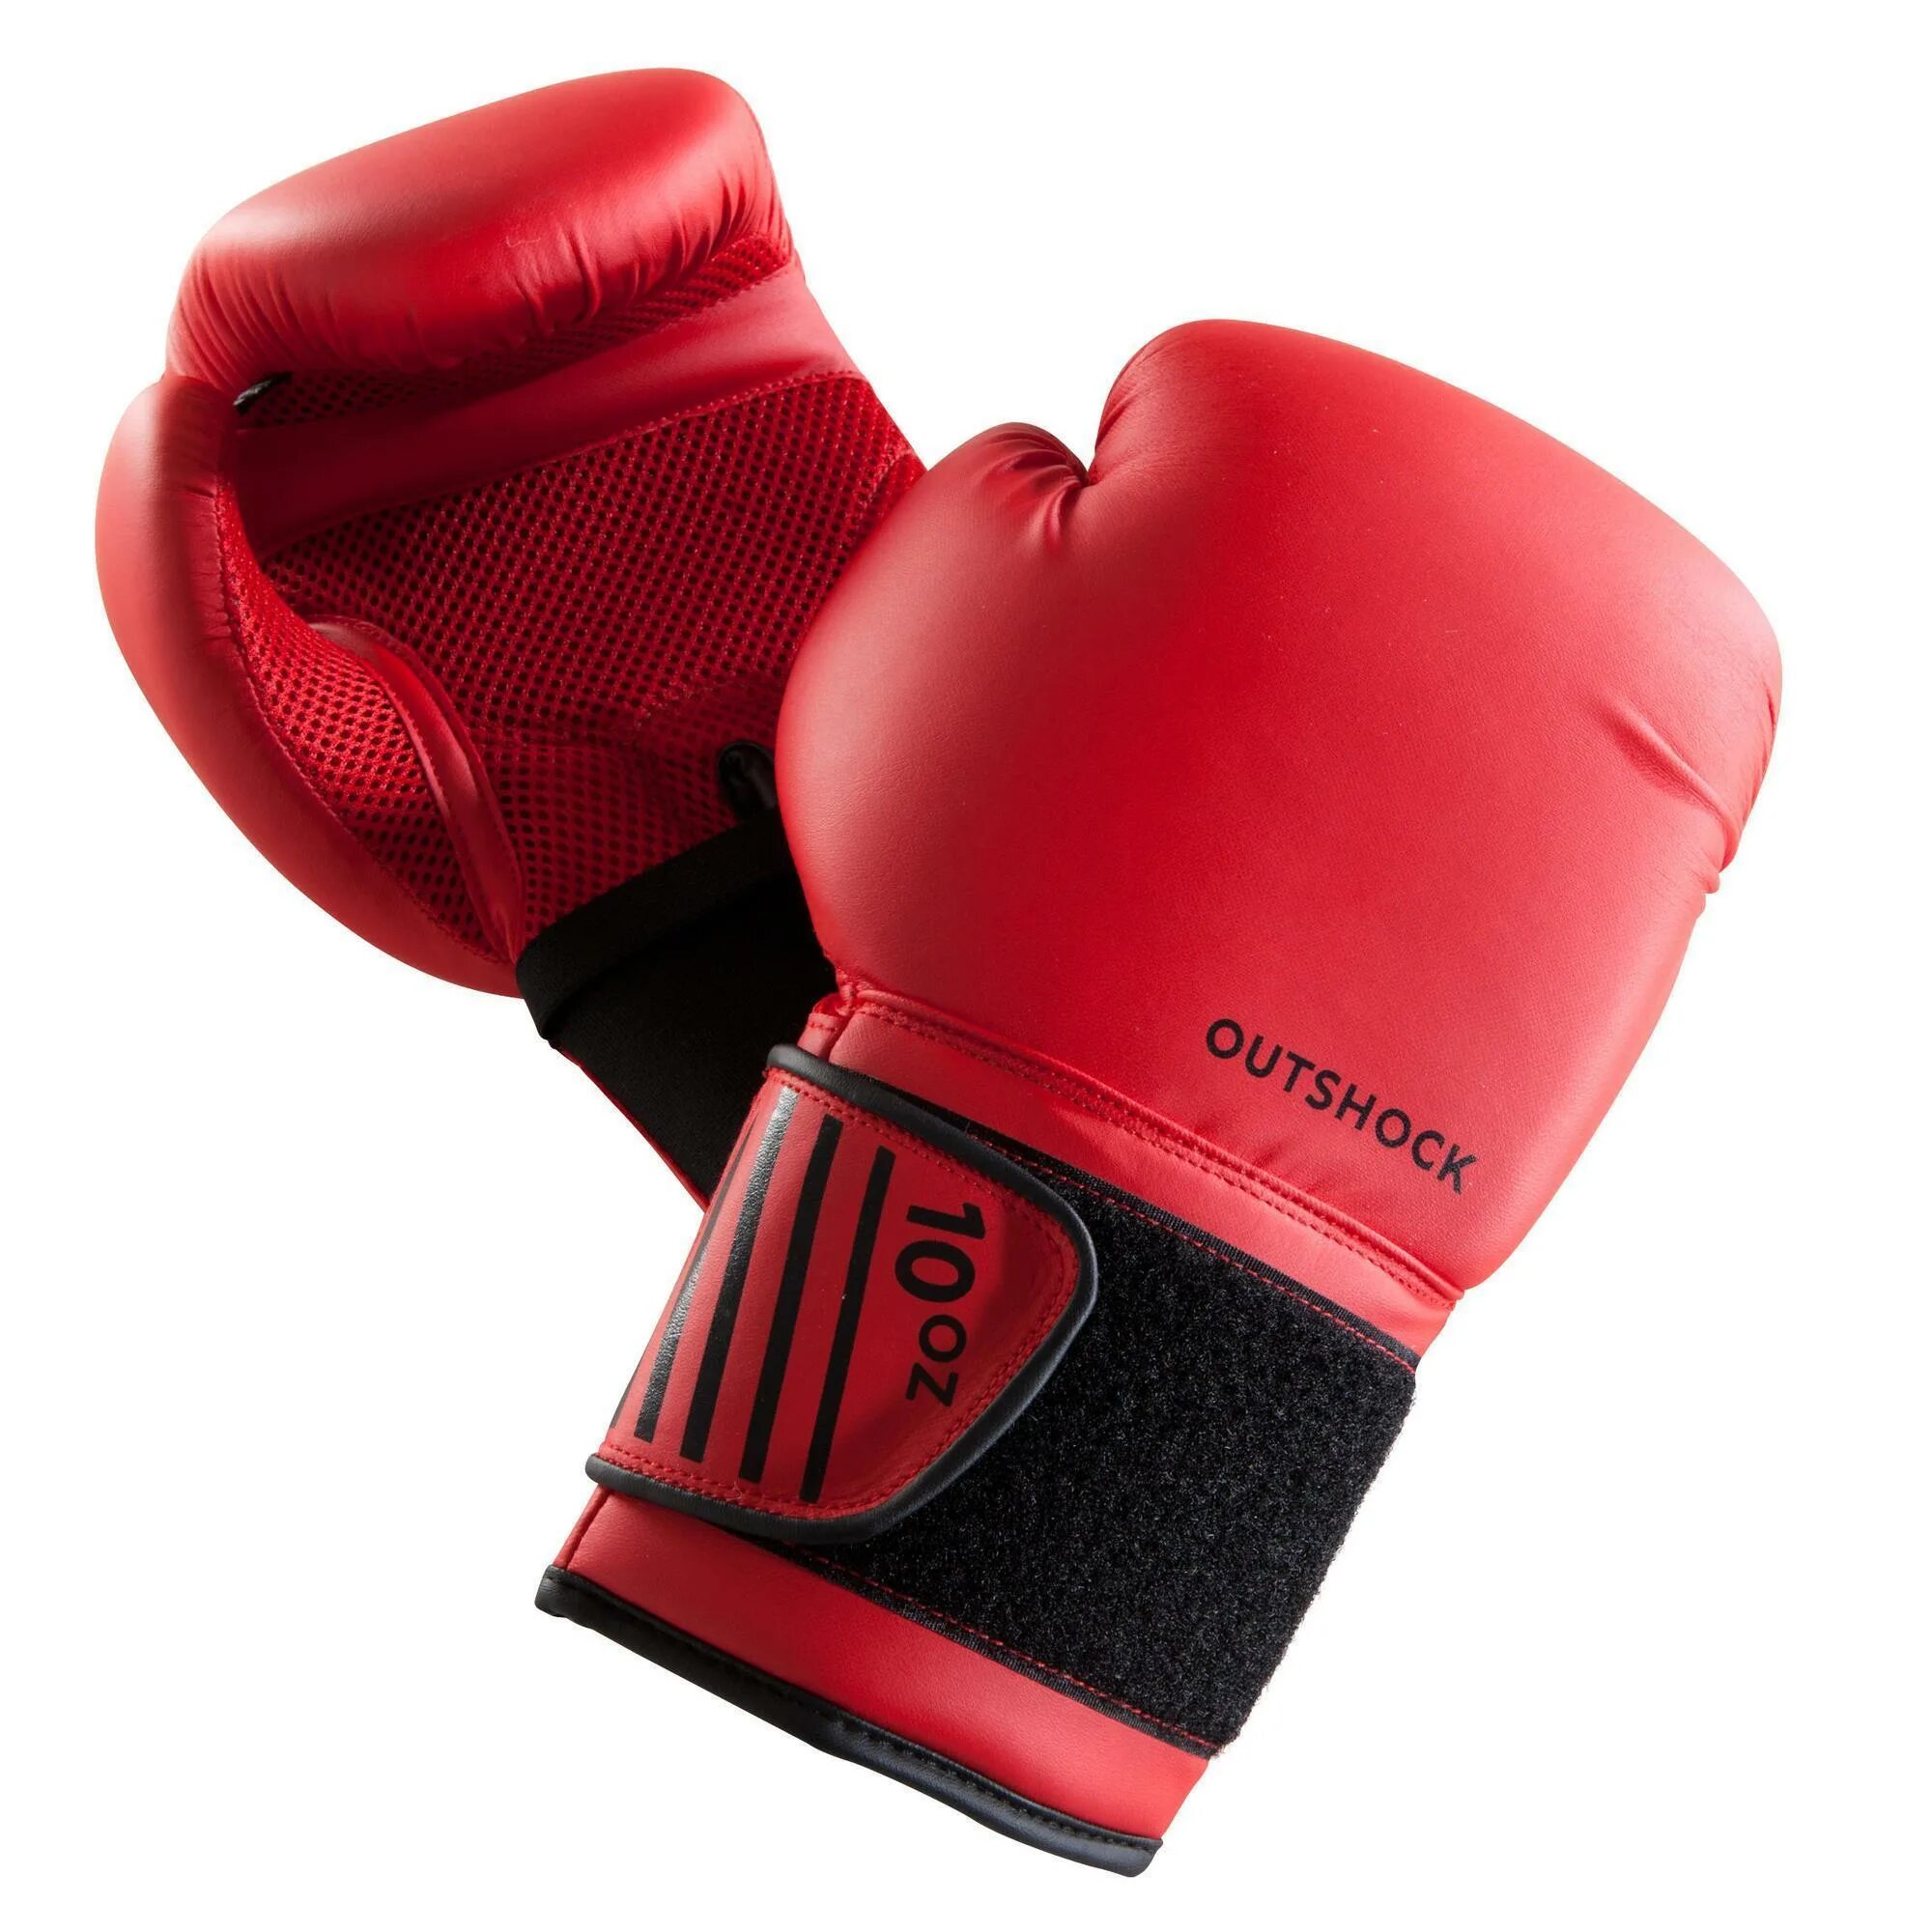 Боксерские перчатки цена. Боксерские перчатки OUTSHOCK 8 oz. Боксерские перчатки OUTSHOCK 10 oz. Боксерские перчатки OUTSHOCK 12 oz. Боксерские перчатки Domyos 10 oz.